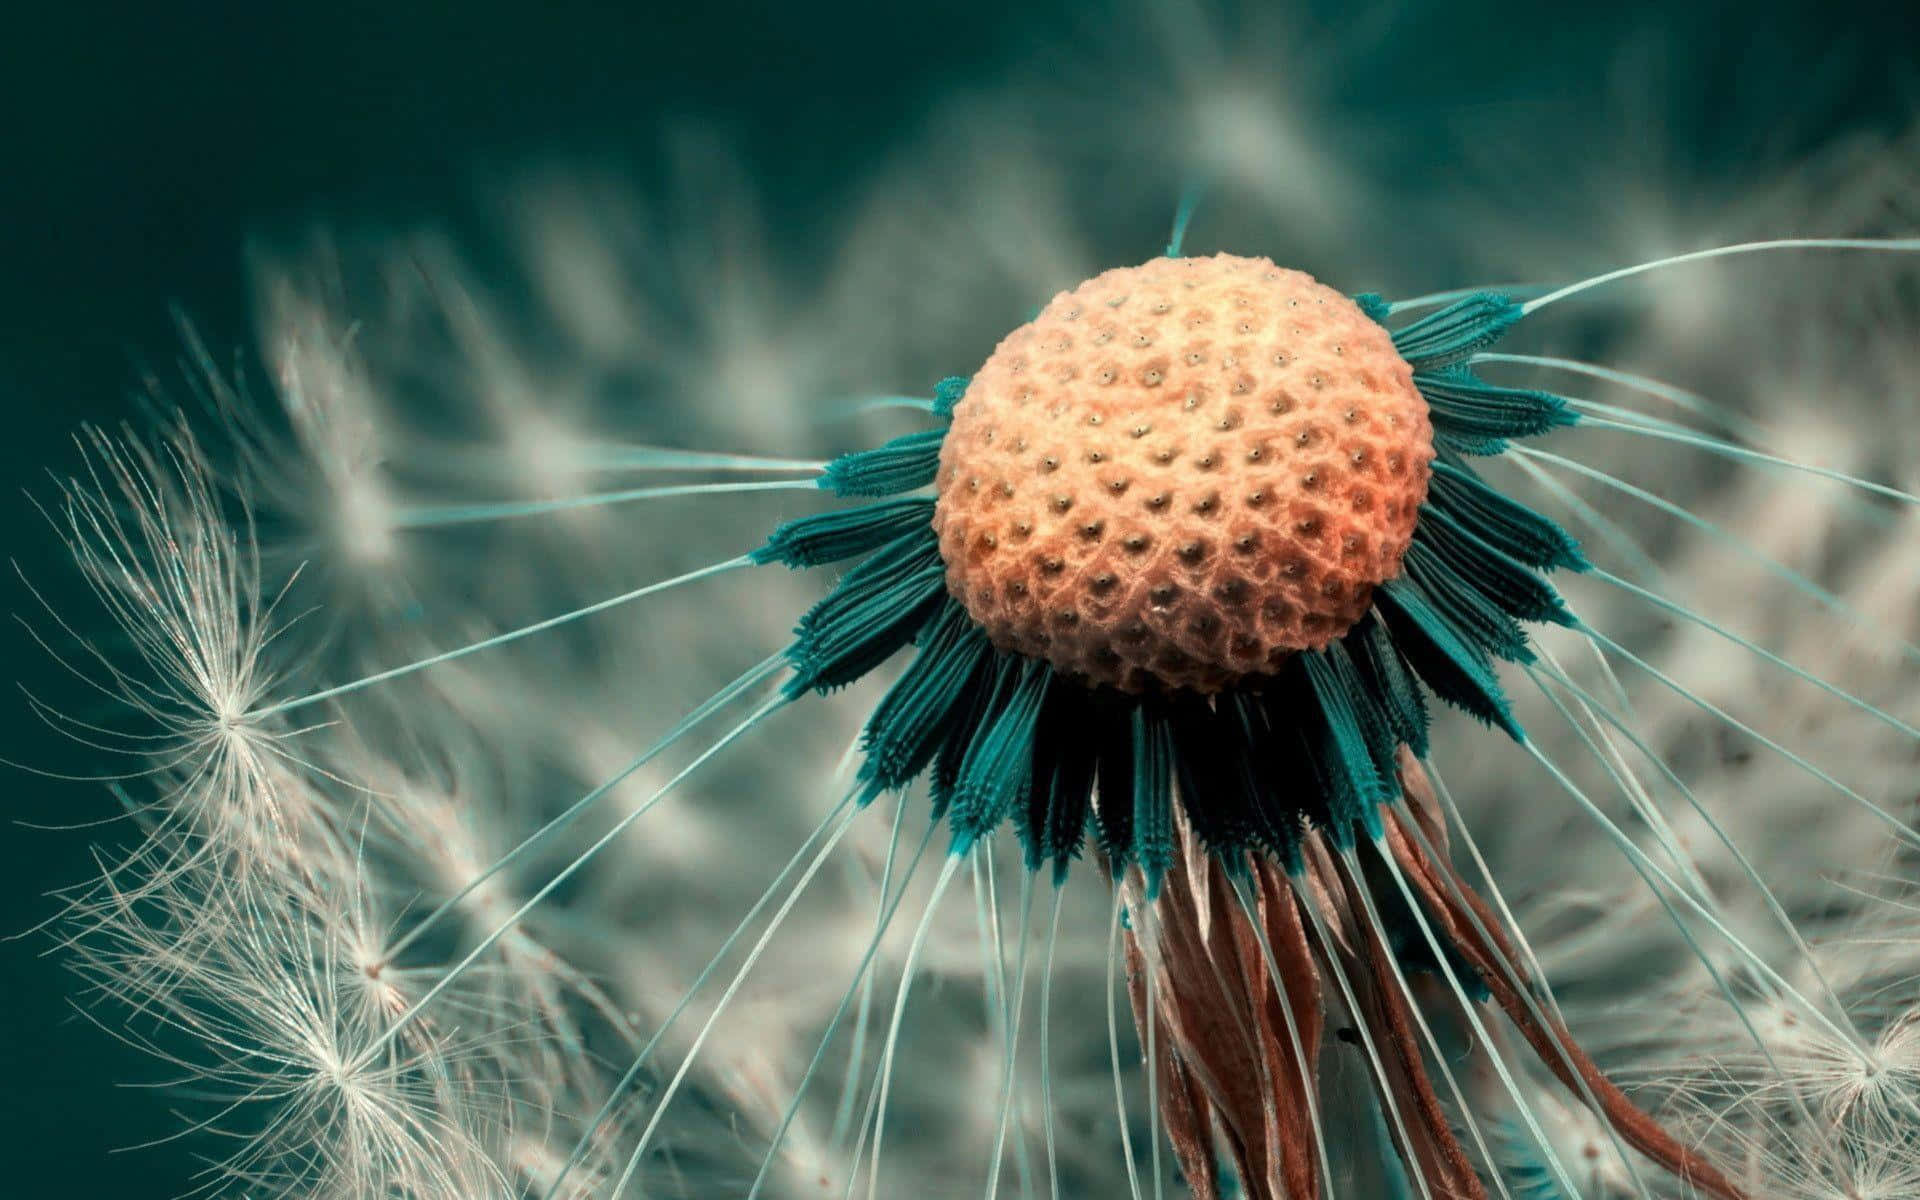 A stunning capture of a delicate dandelion against a blurred natural landscape.